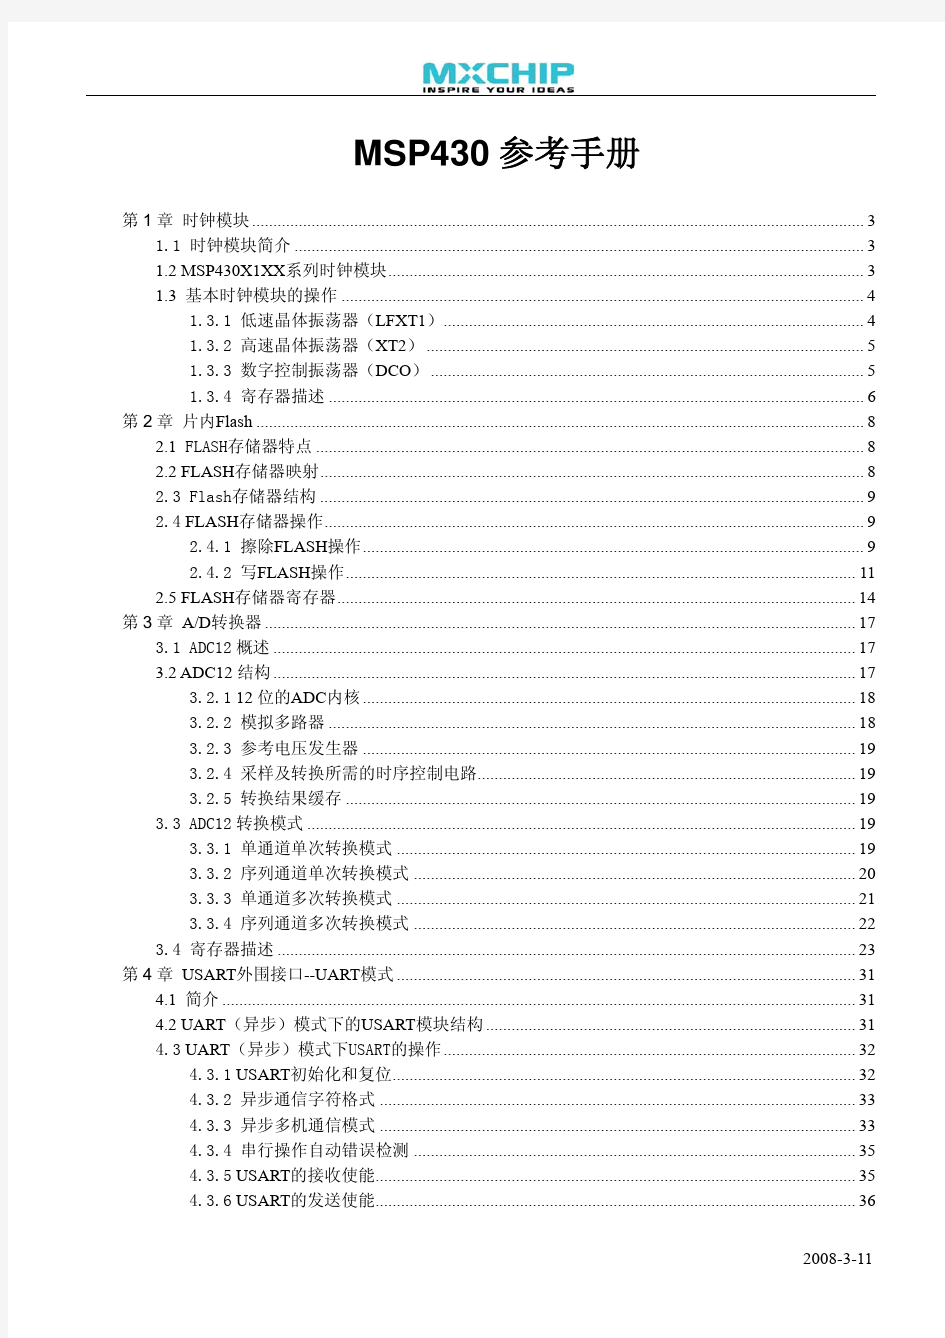 msp430中文参考手册